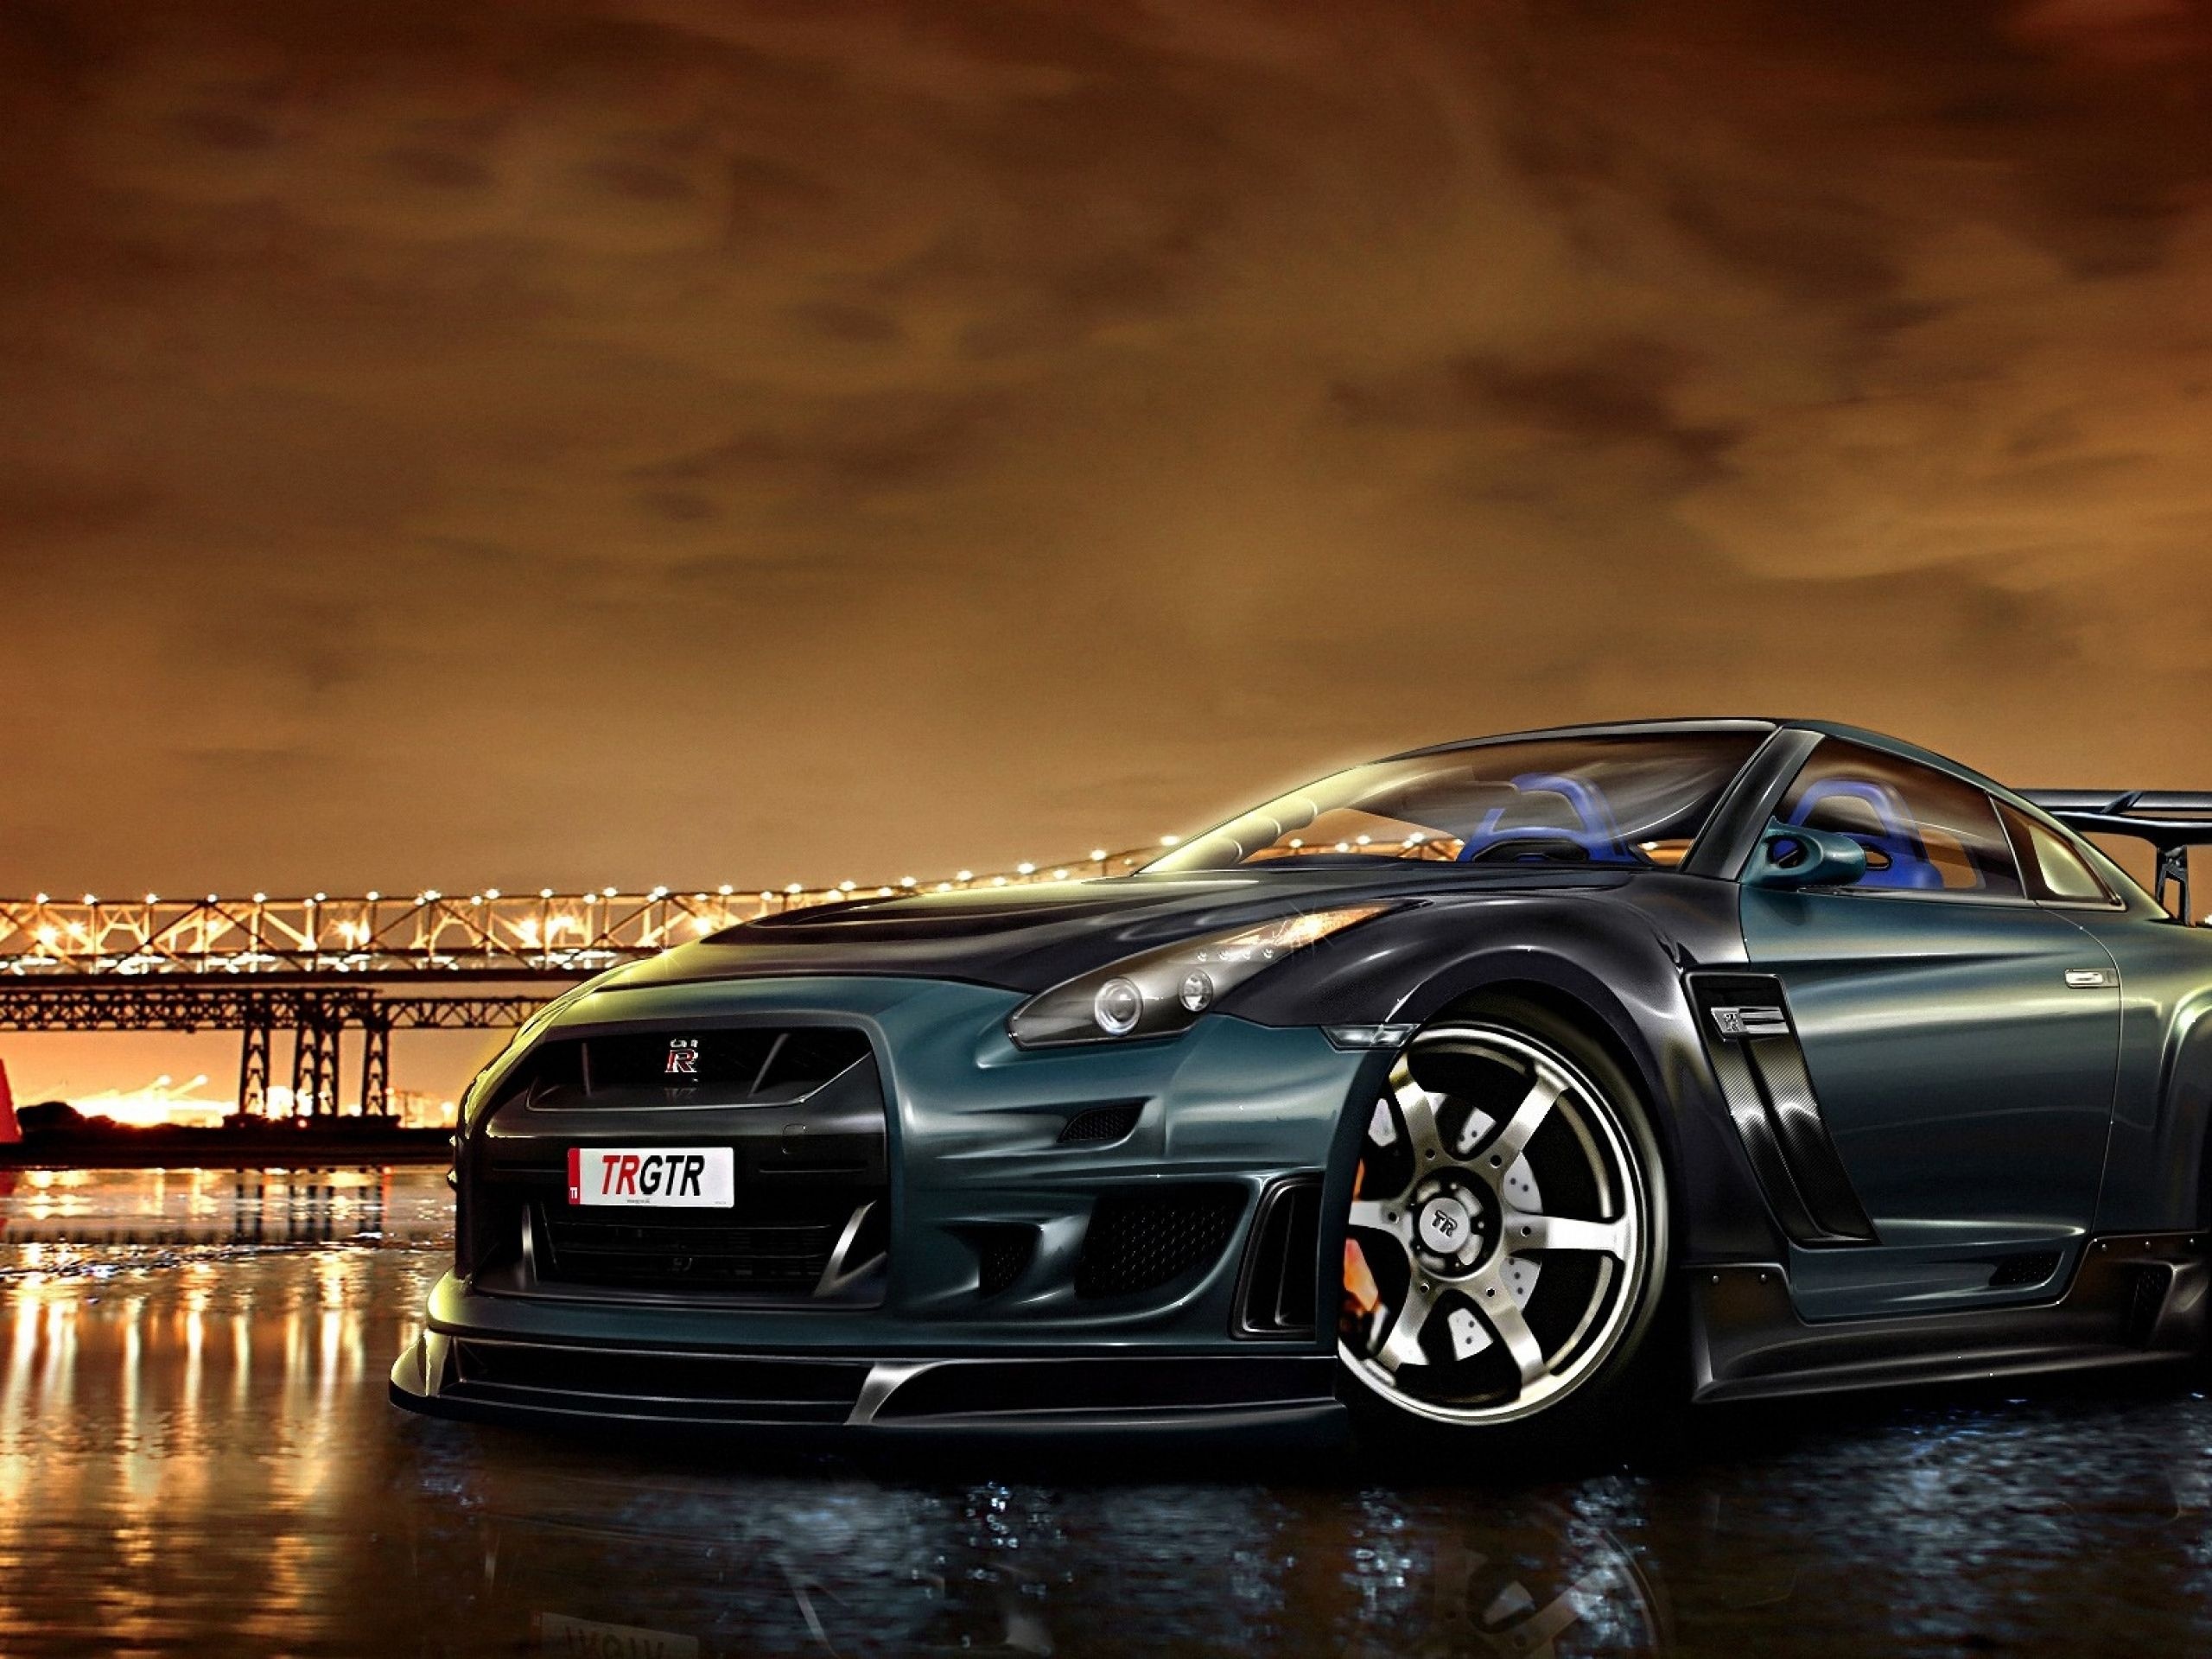 Nissan GT-R, Skyline heritage, Speed and power, Stunning wallpapers, 2560x1920 HD Desktop